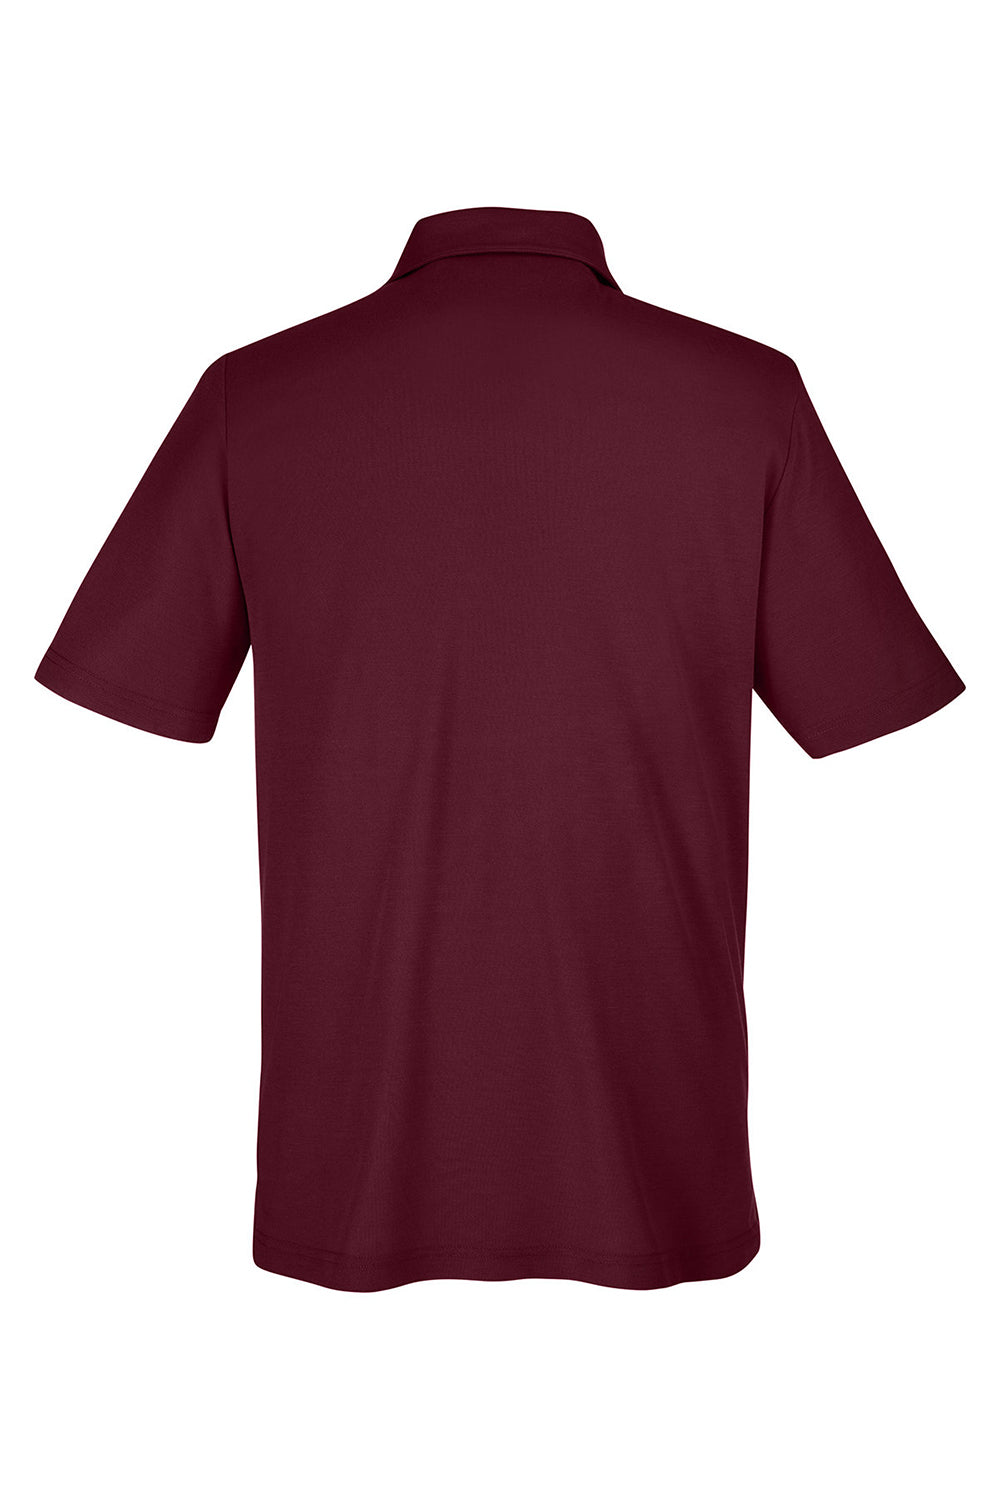 Core 365 CE112 Mens Fusion ChromaSoft Performance Moisture Wicking Short Sleeve Polo Shirt Burgundy Flat Back